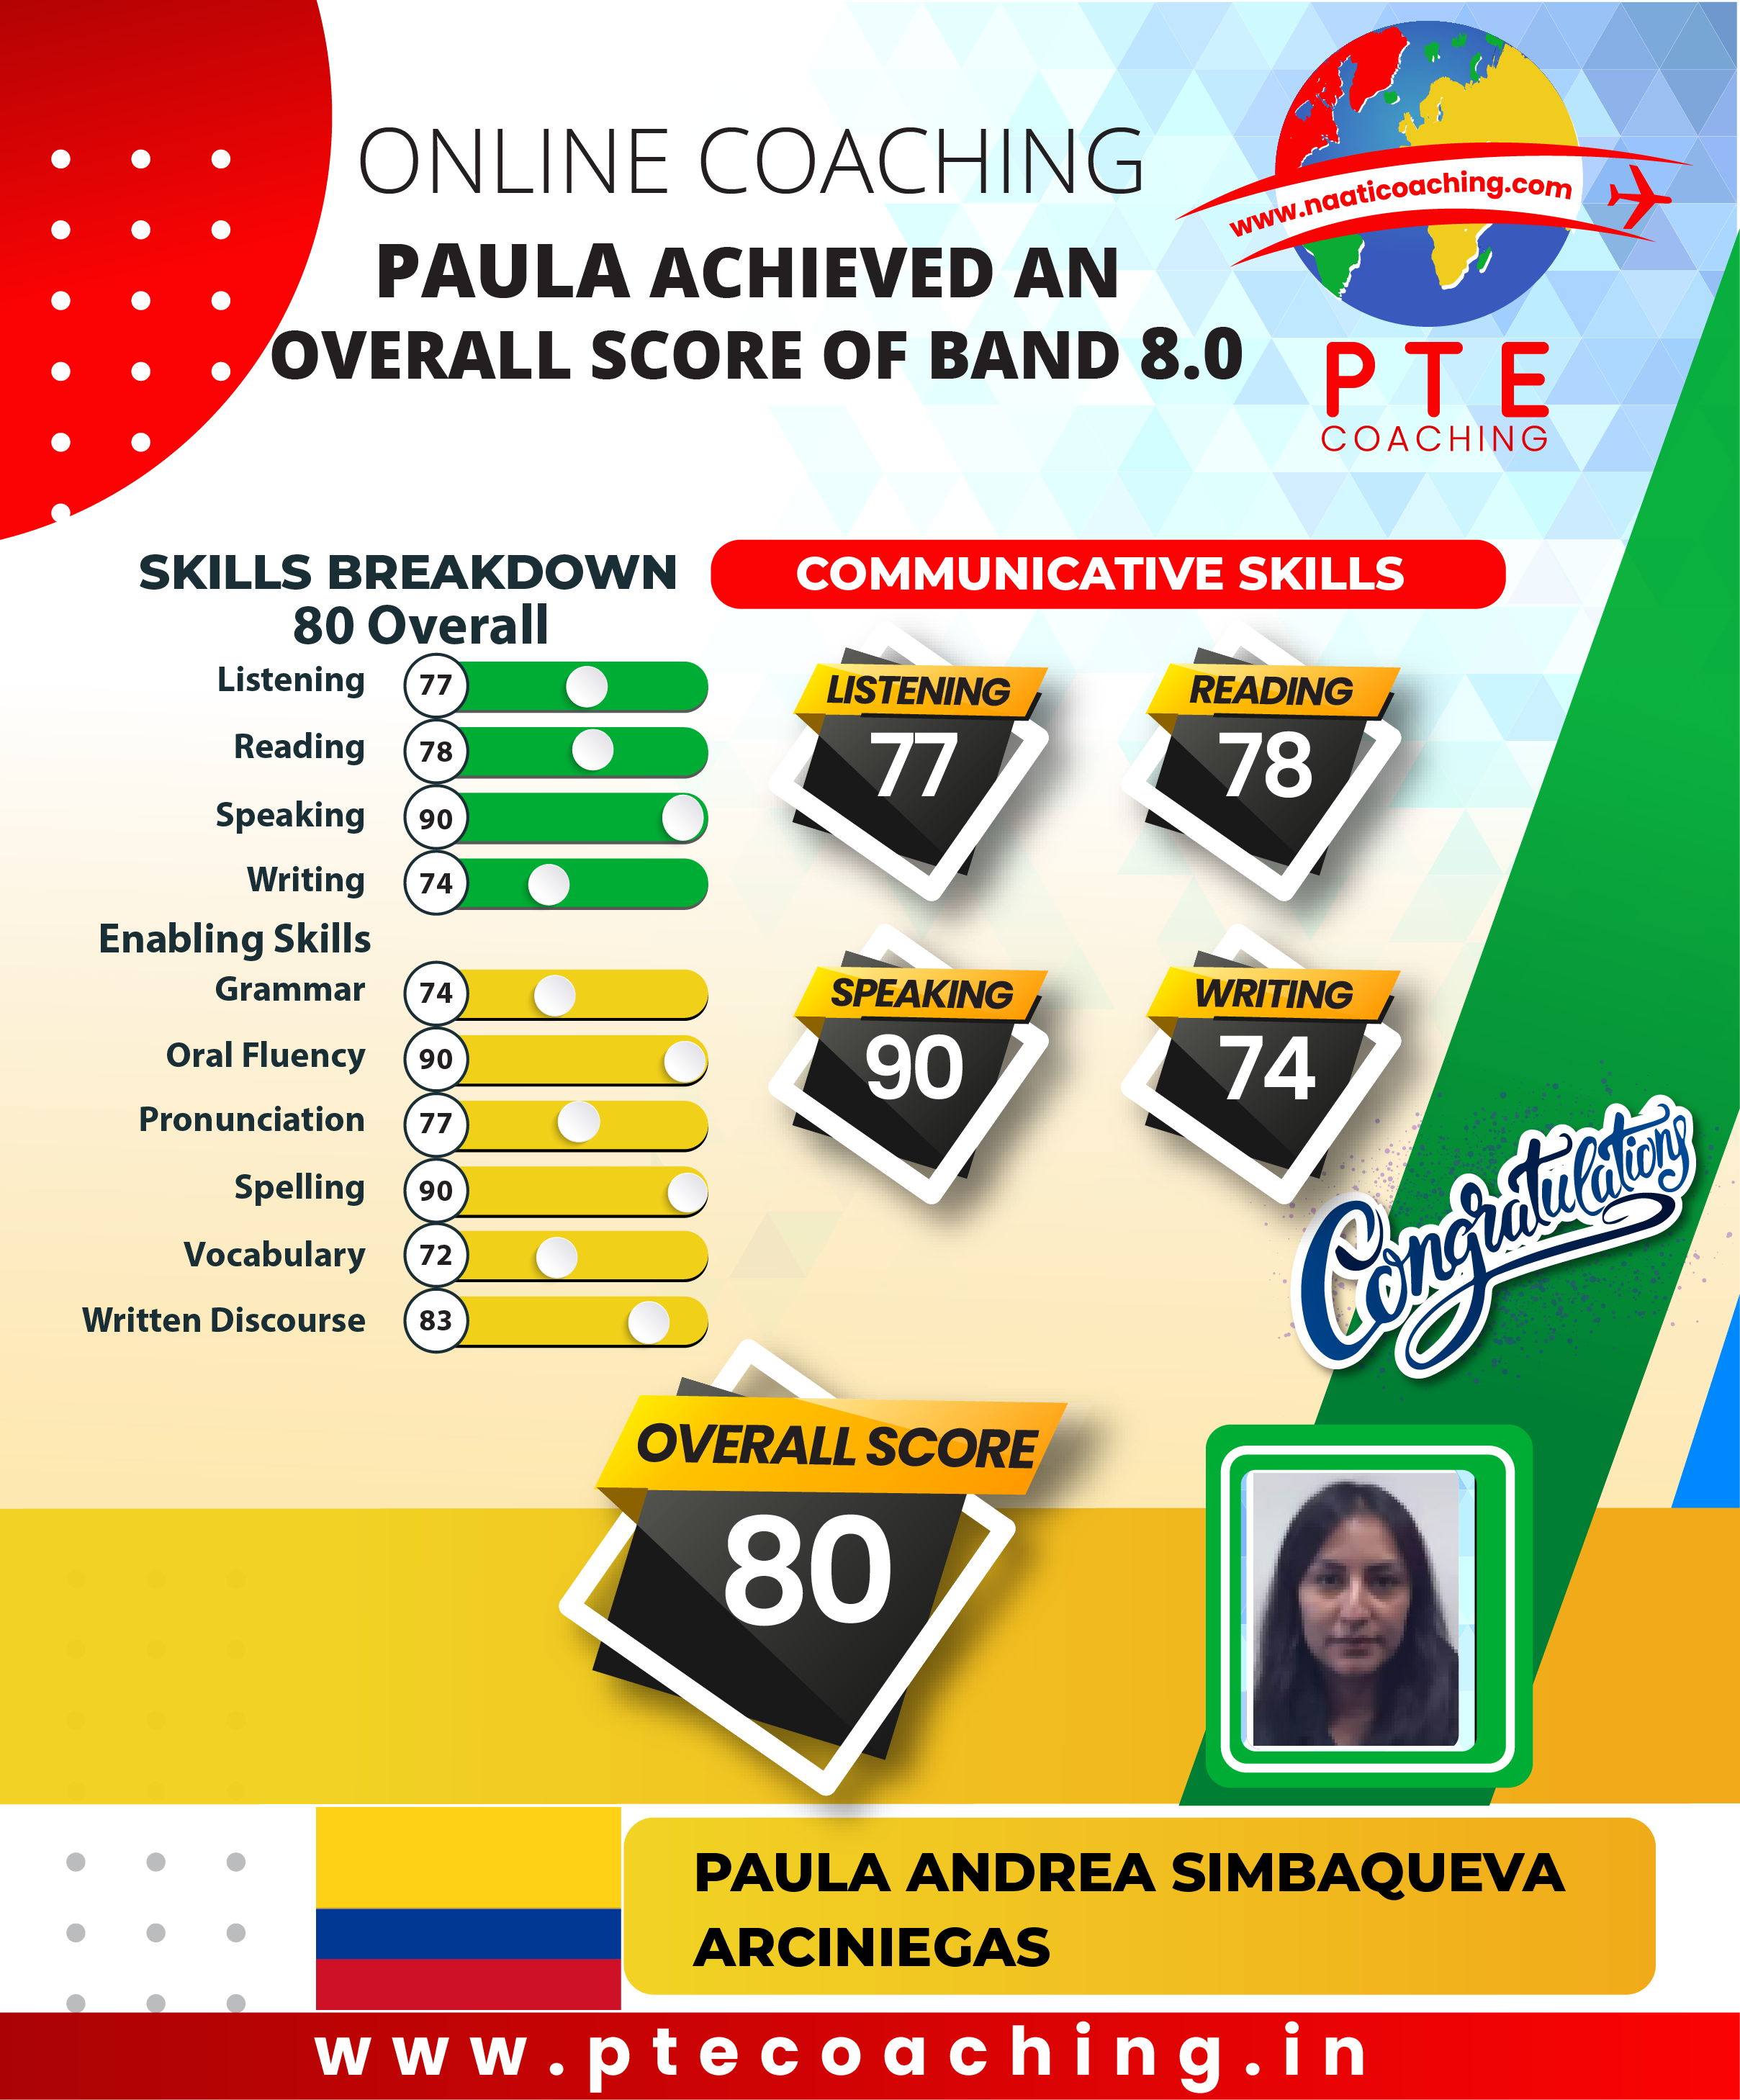 PTE Coaching Scorecard - Paula achieved an overall score of band 8.0